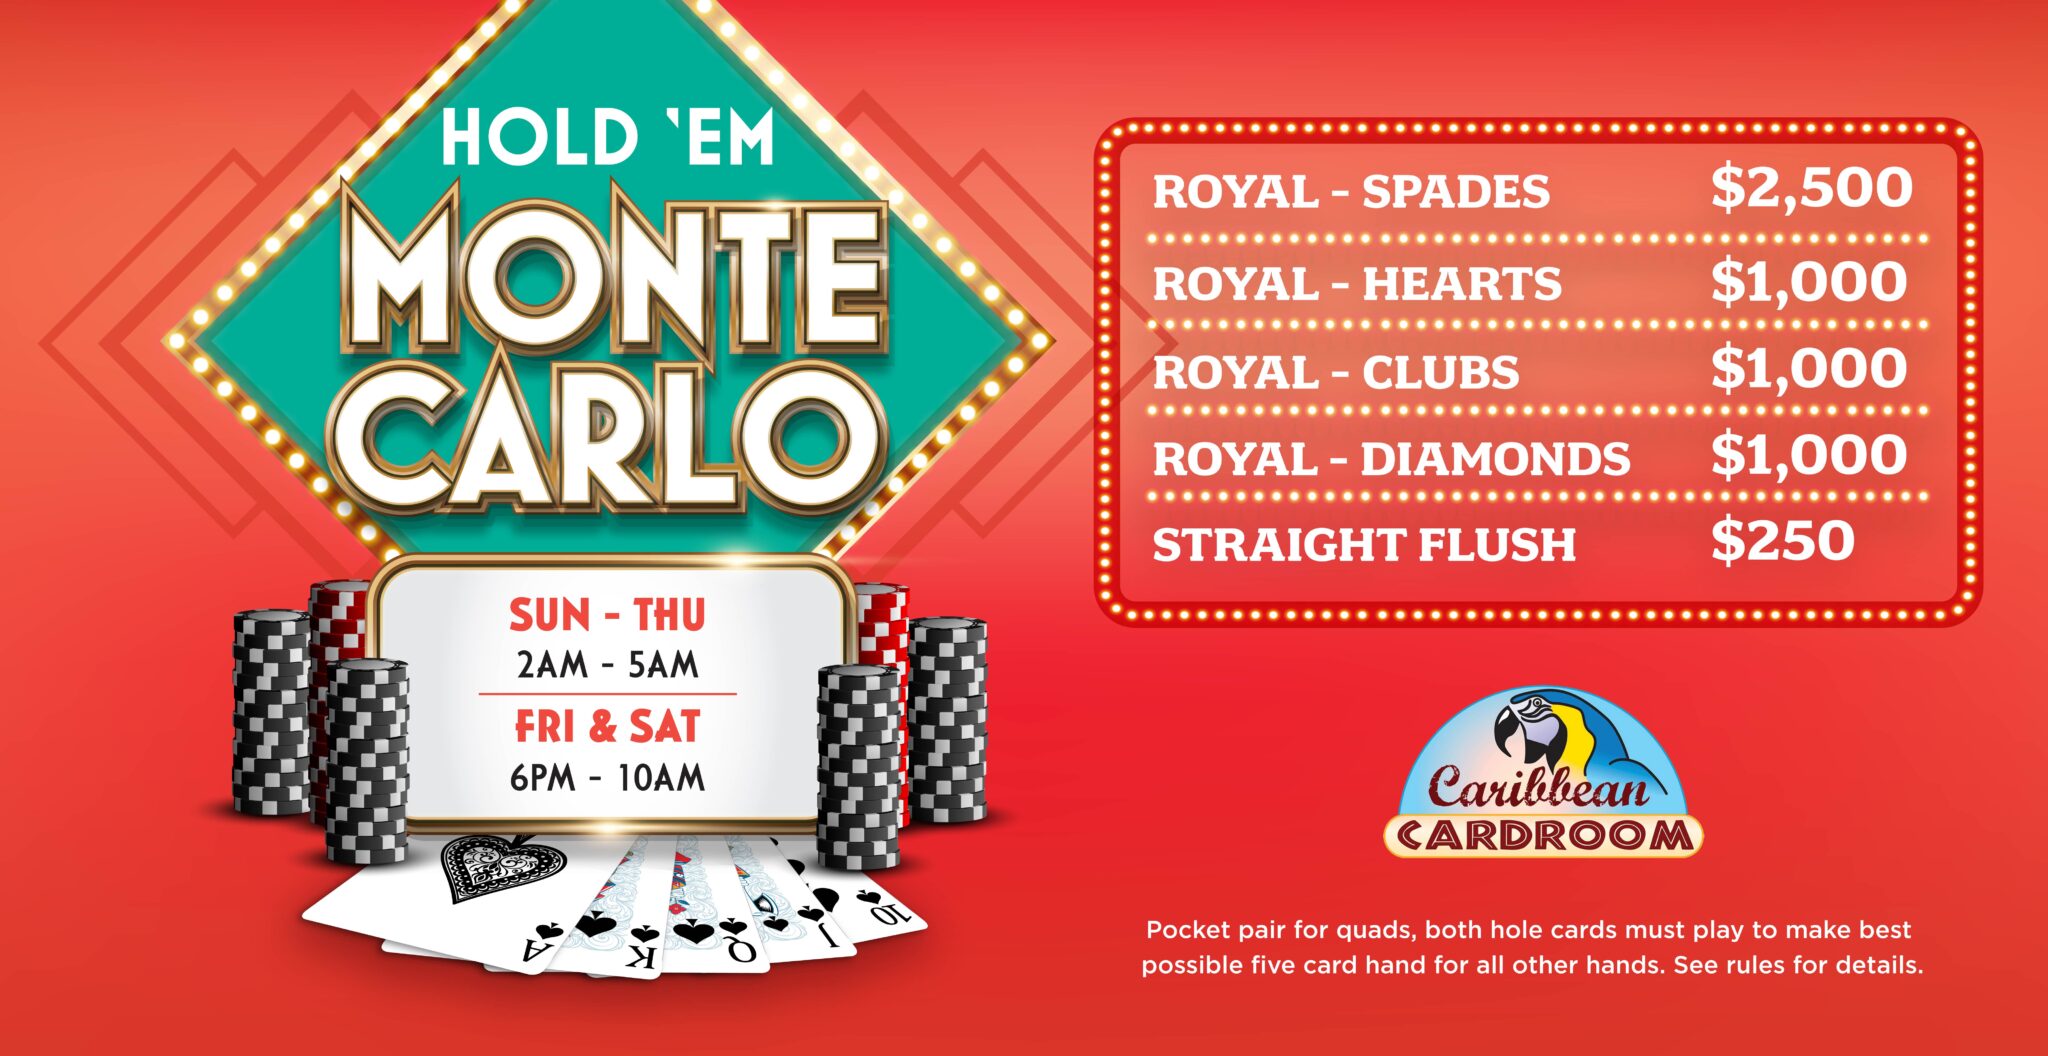 Caribbean Cardroom Kirkland | Holdem Monte Carlo